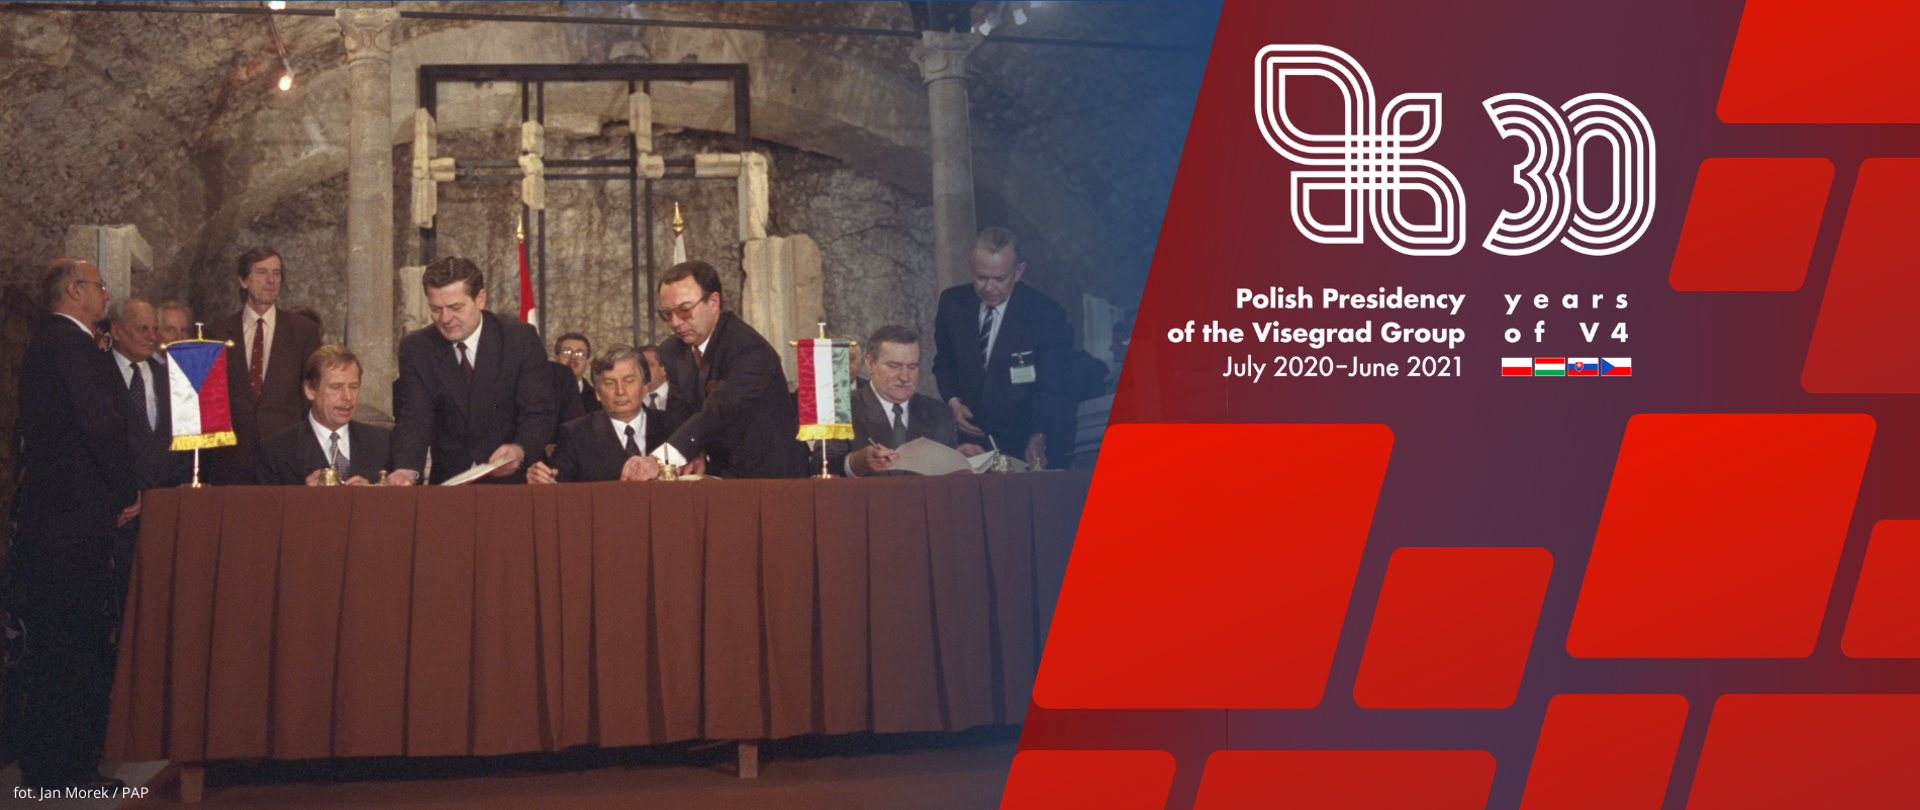 30th anniversary of the Visegrad cooperation